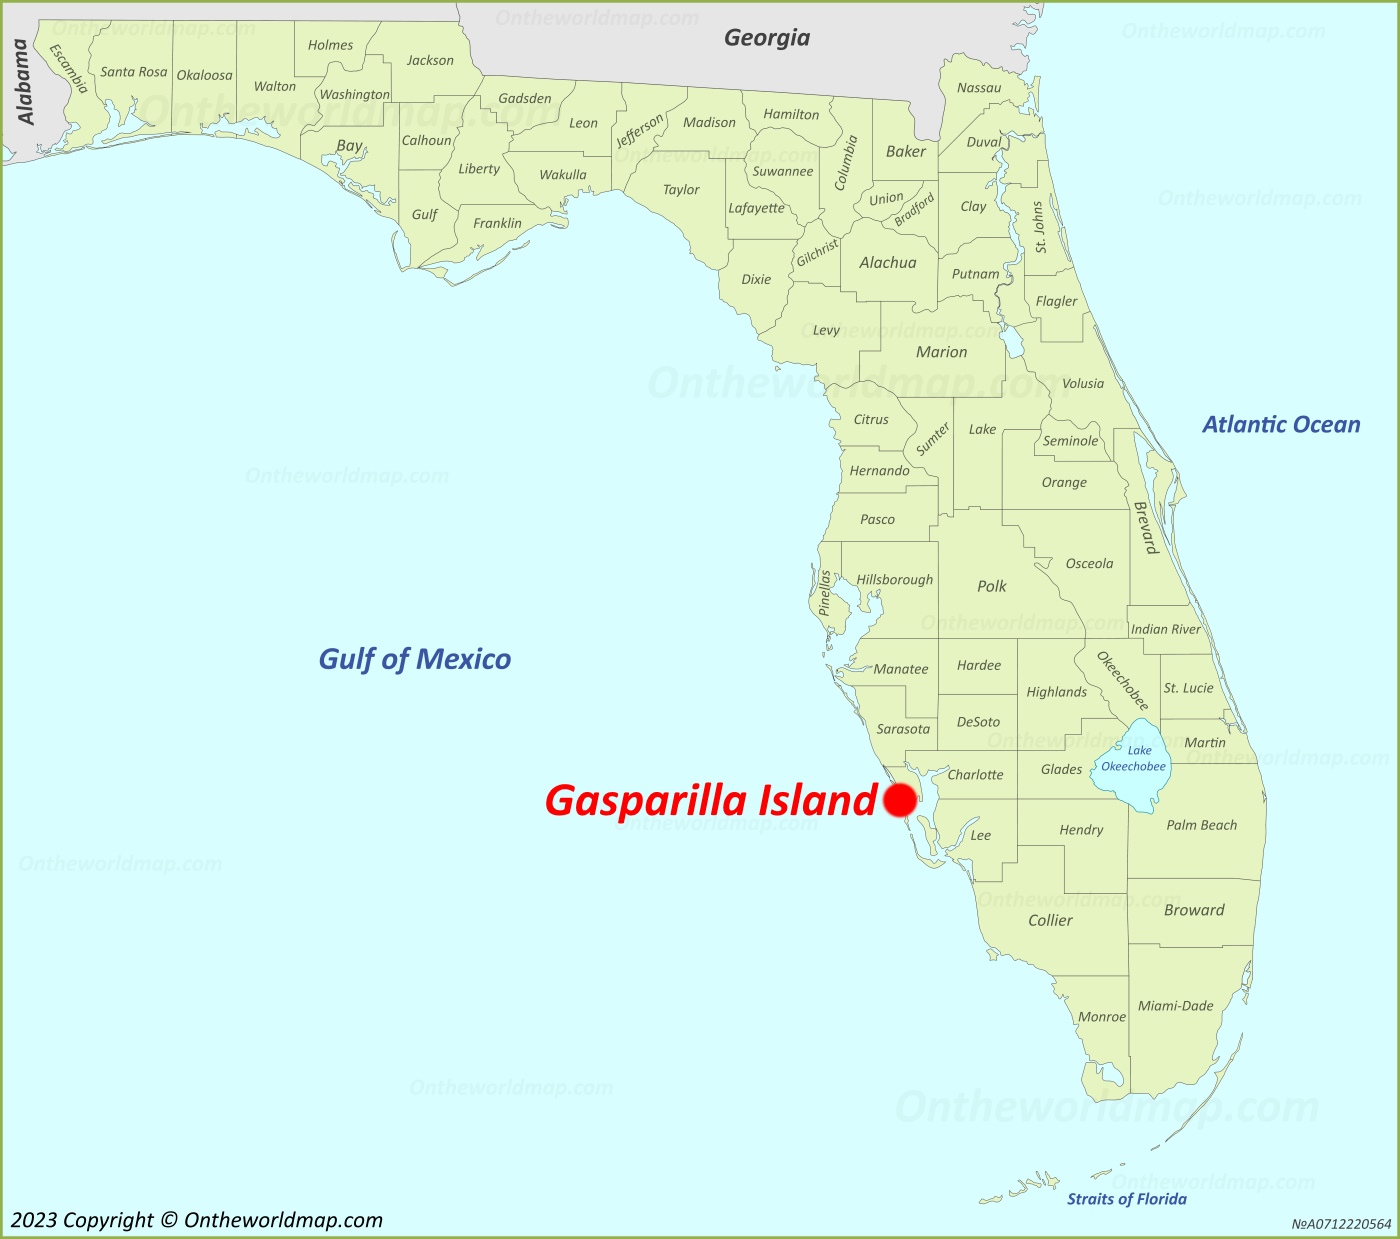 Gasparilla Island Location On The Florida Map